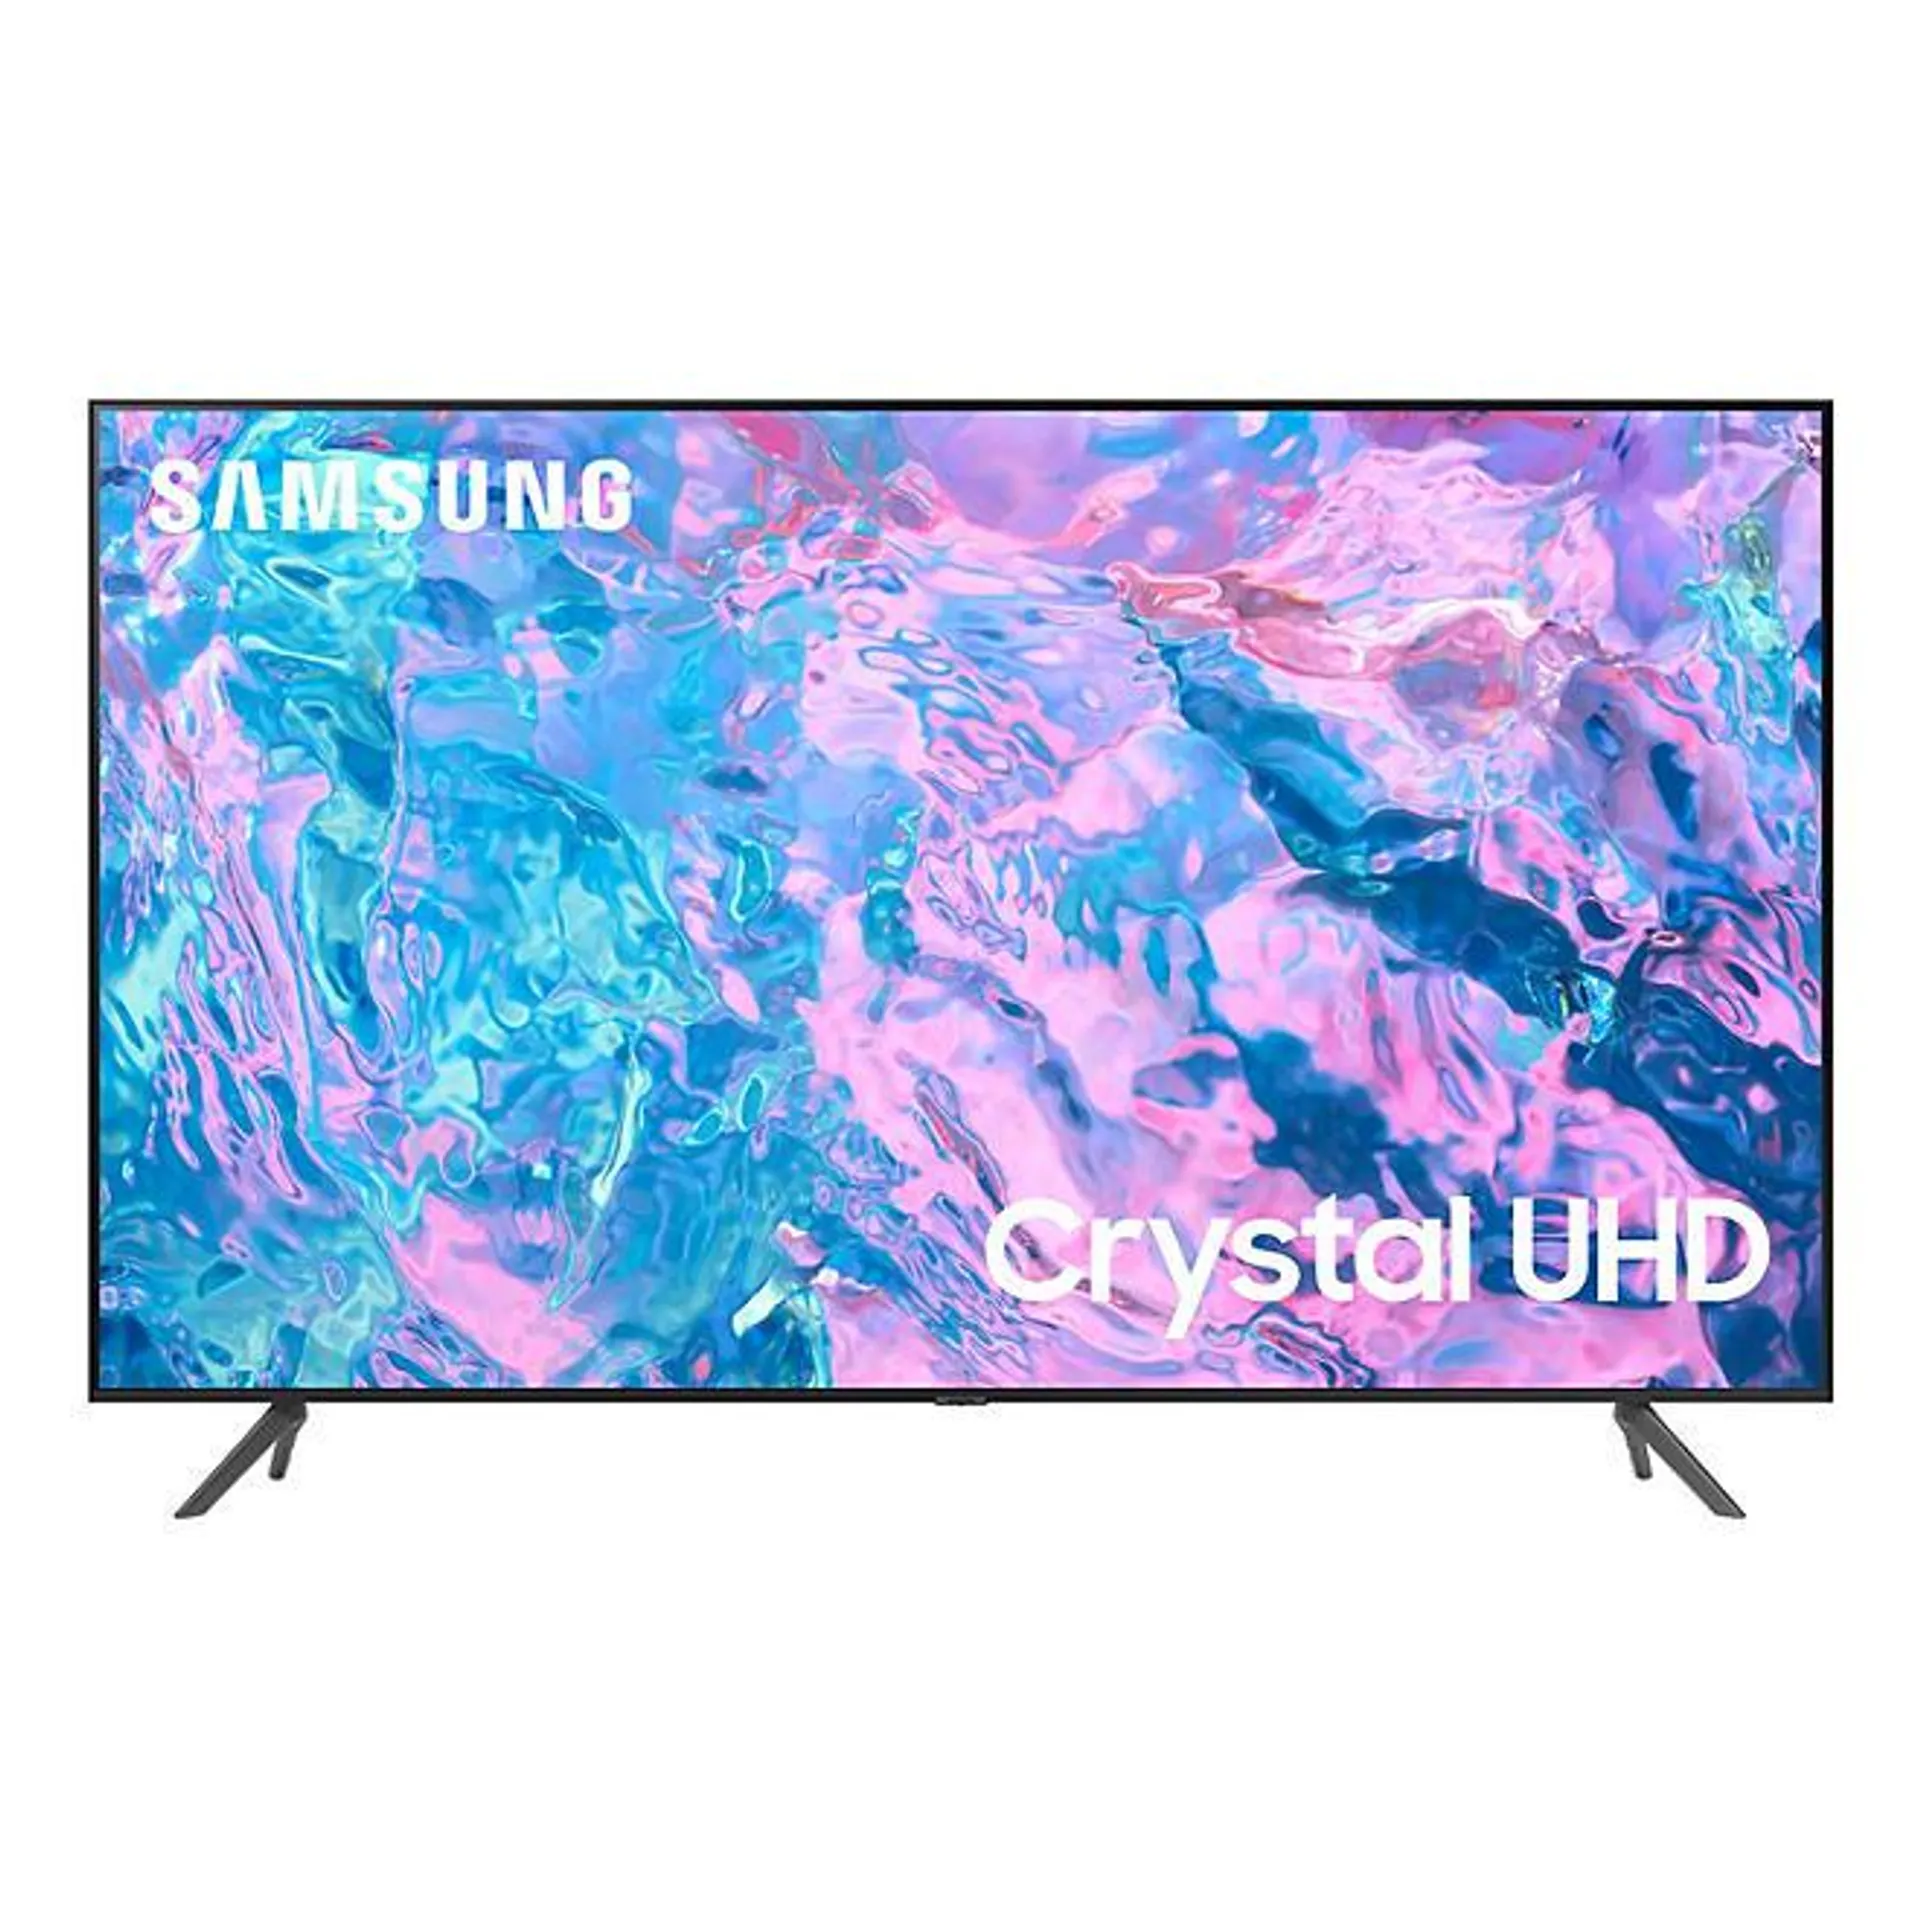 SAMSUNG 50" Class CU7000-Series Crystal UHD 4K Smart TV with HDR - UN50CU7000DXZA